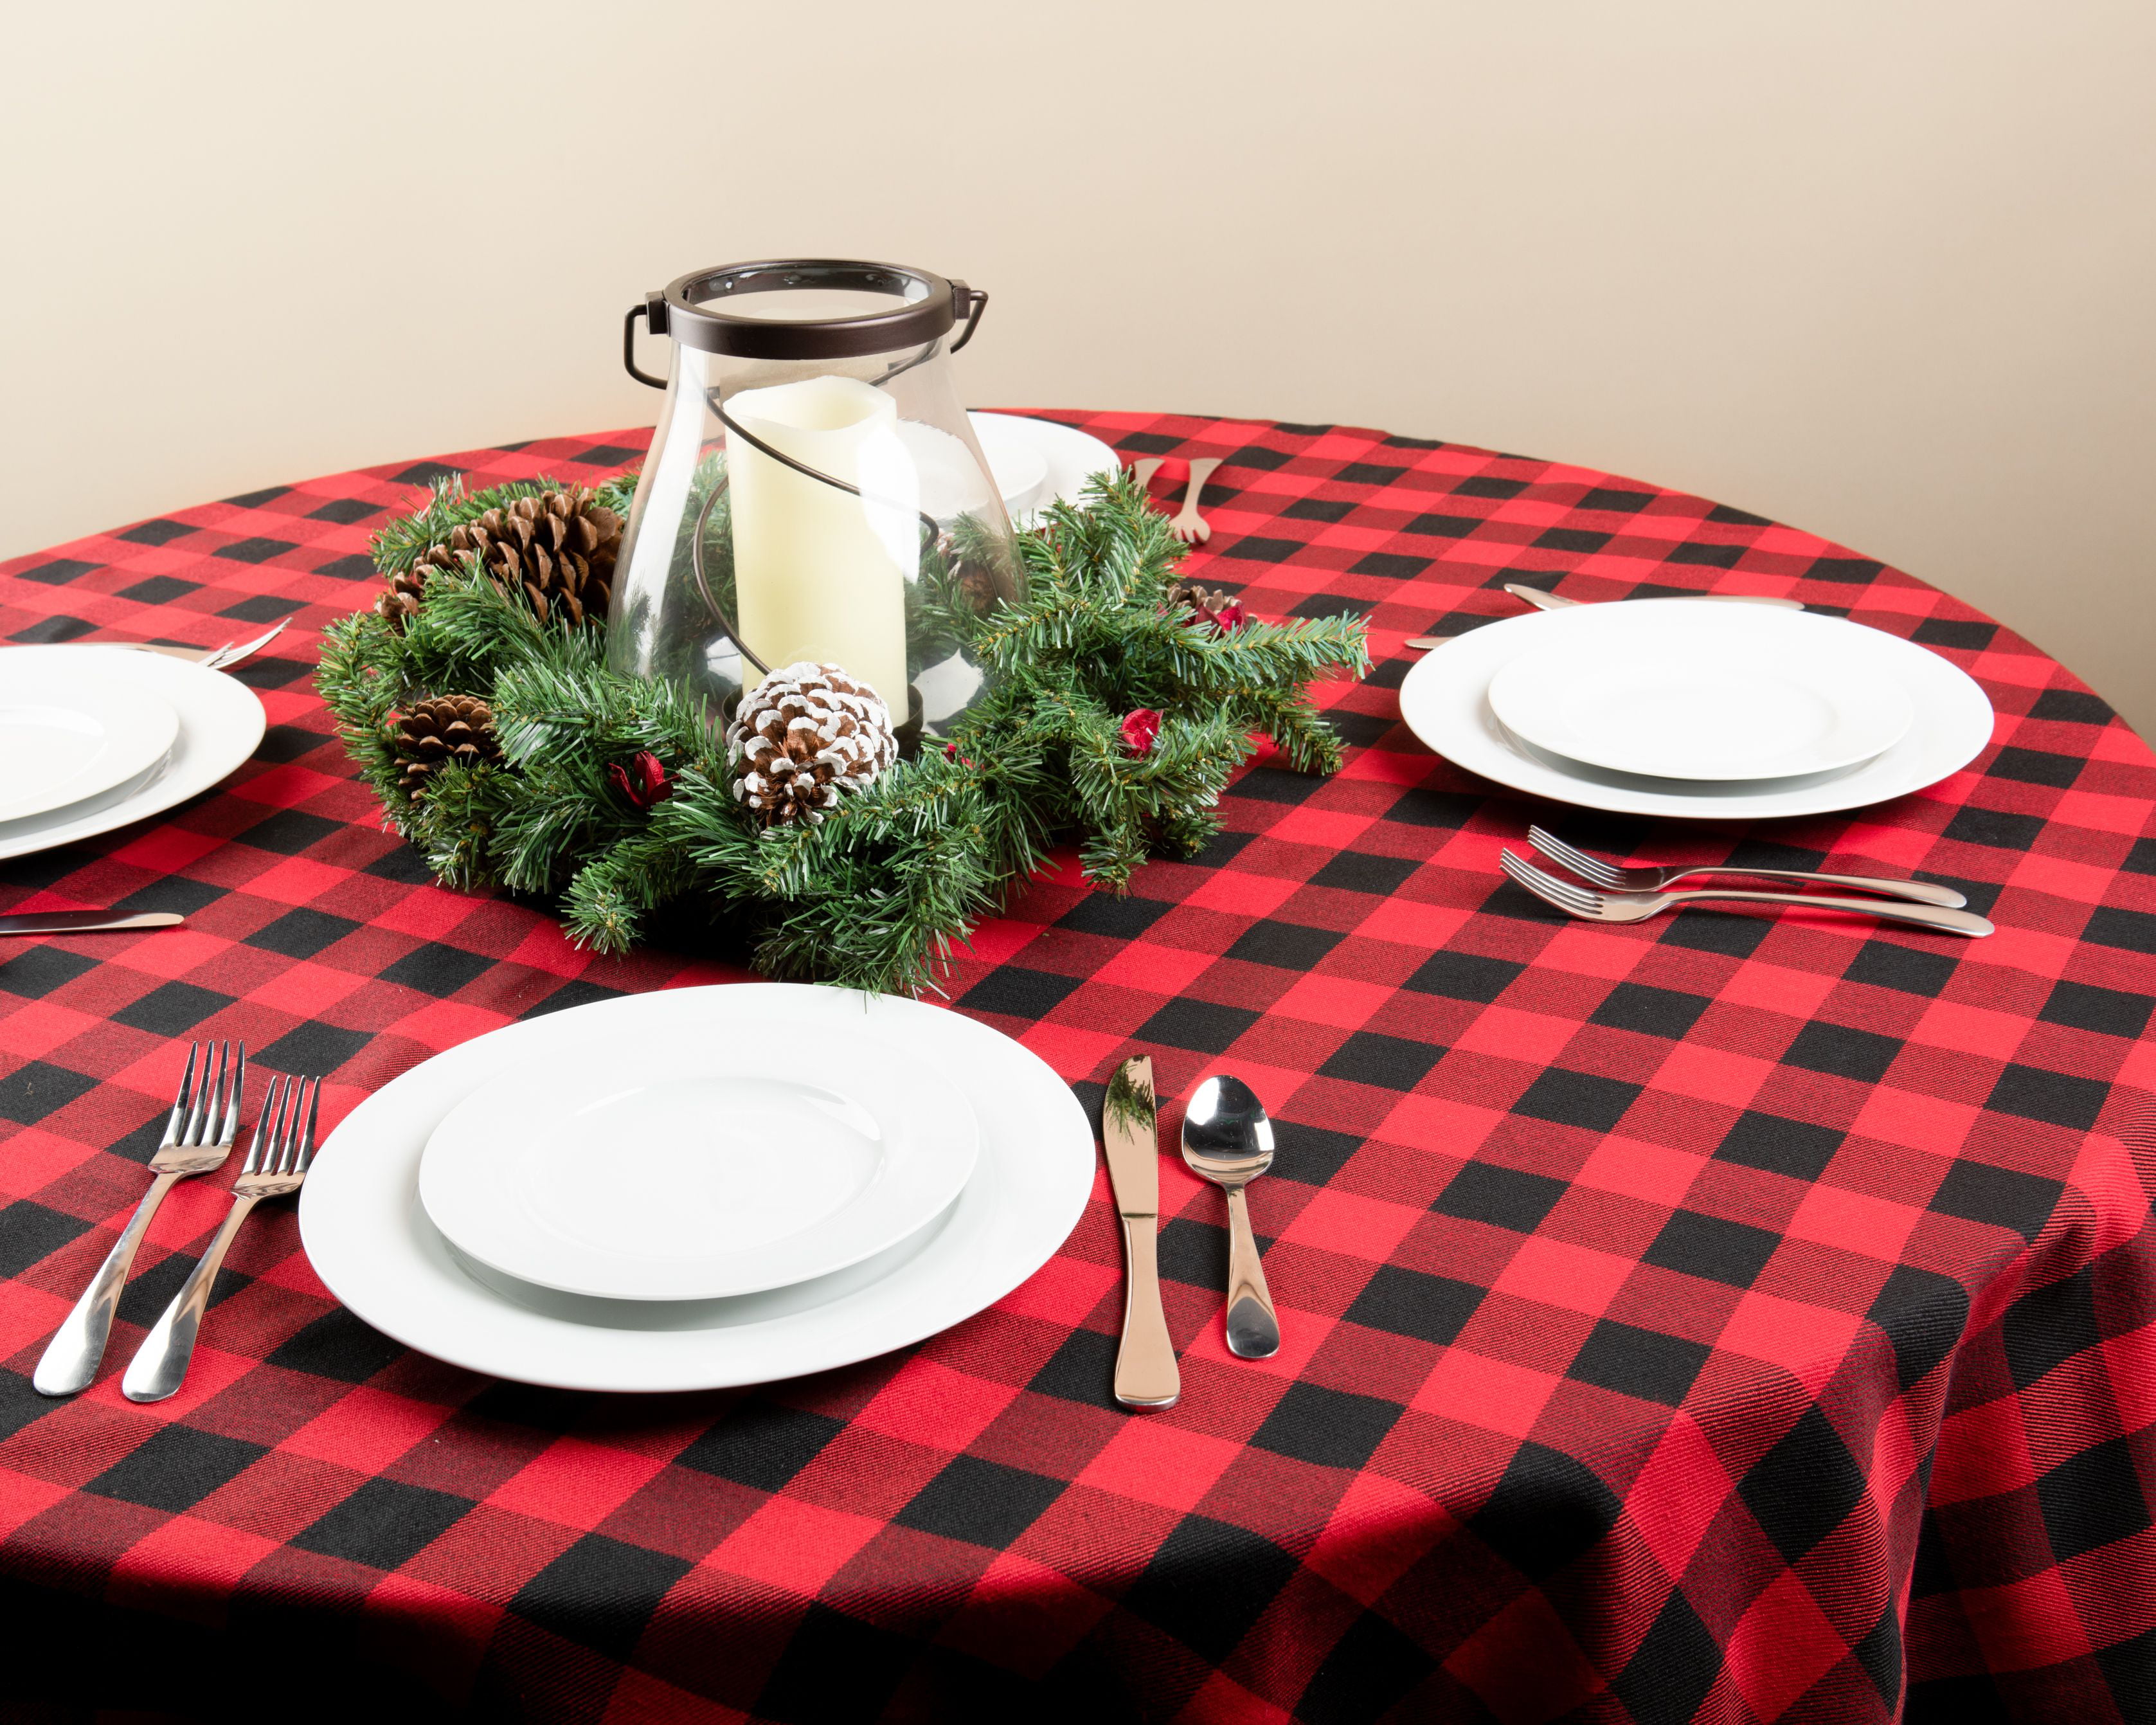 LAGHCAT Buffalo Plaid Tablecloth 55 x 70 Inch Red Black Rectangular Cotton Tablecloths for Christmas Parties Dinner Dining Farmhouse Decor